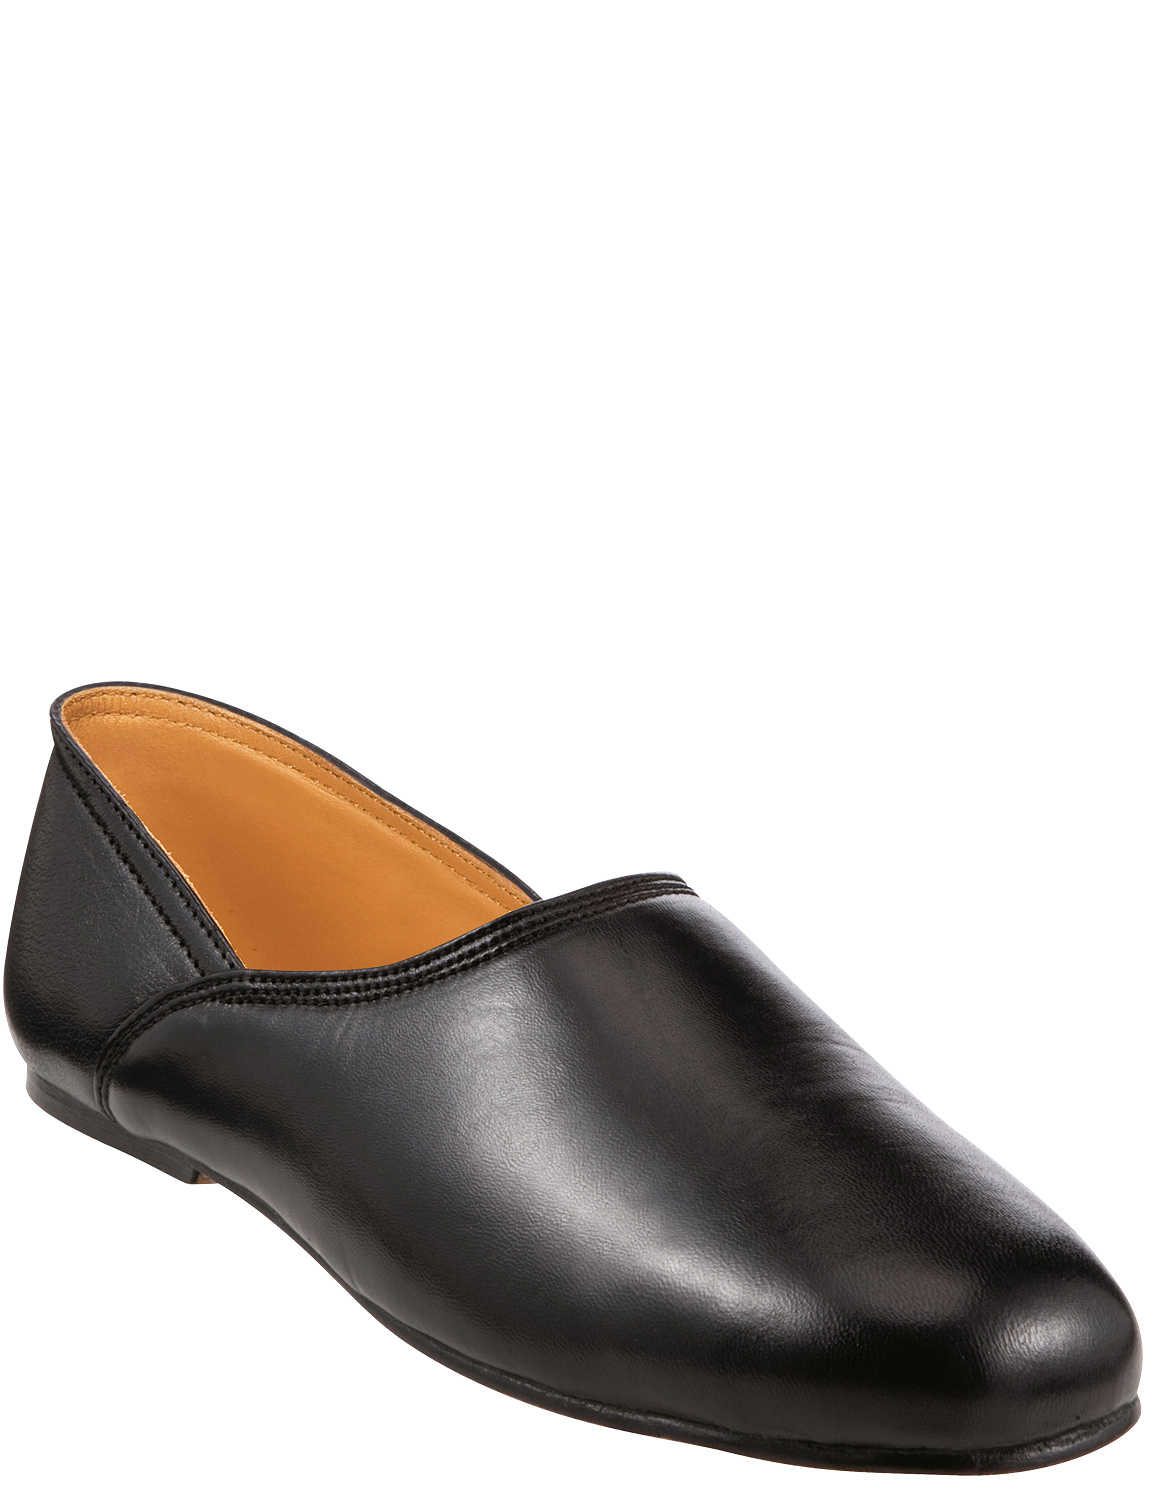 Real Leather Grecian Slipper - Menswear Footwear | Chums